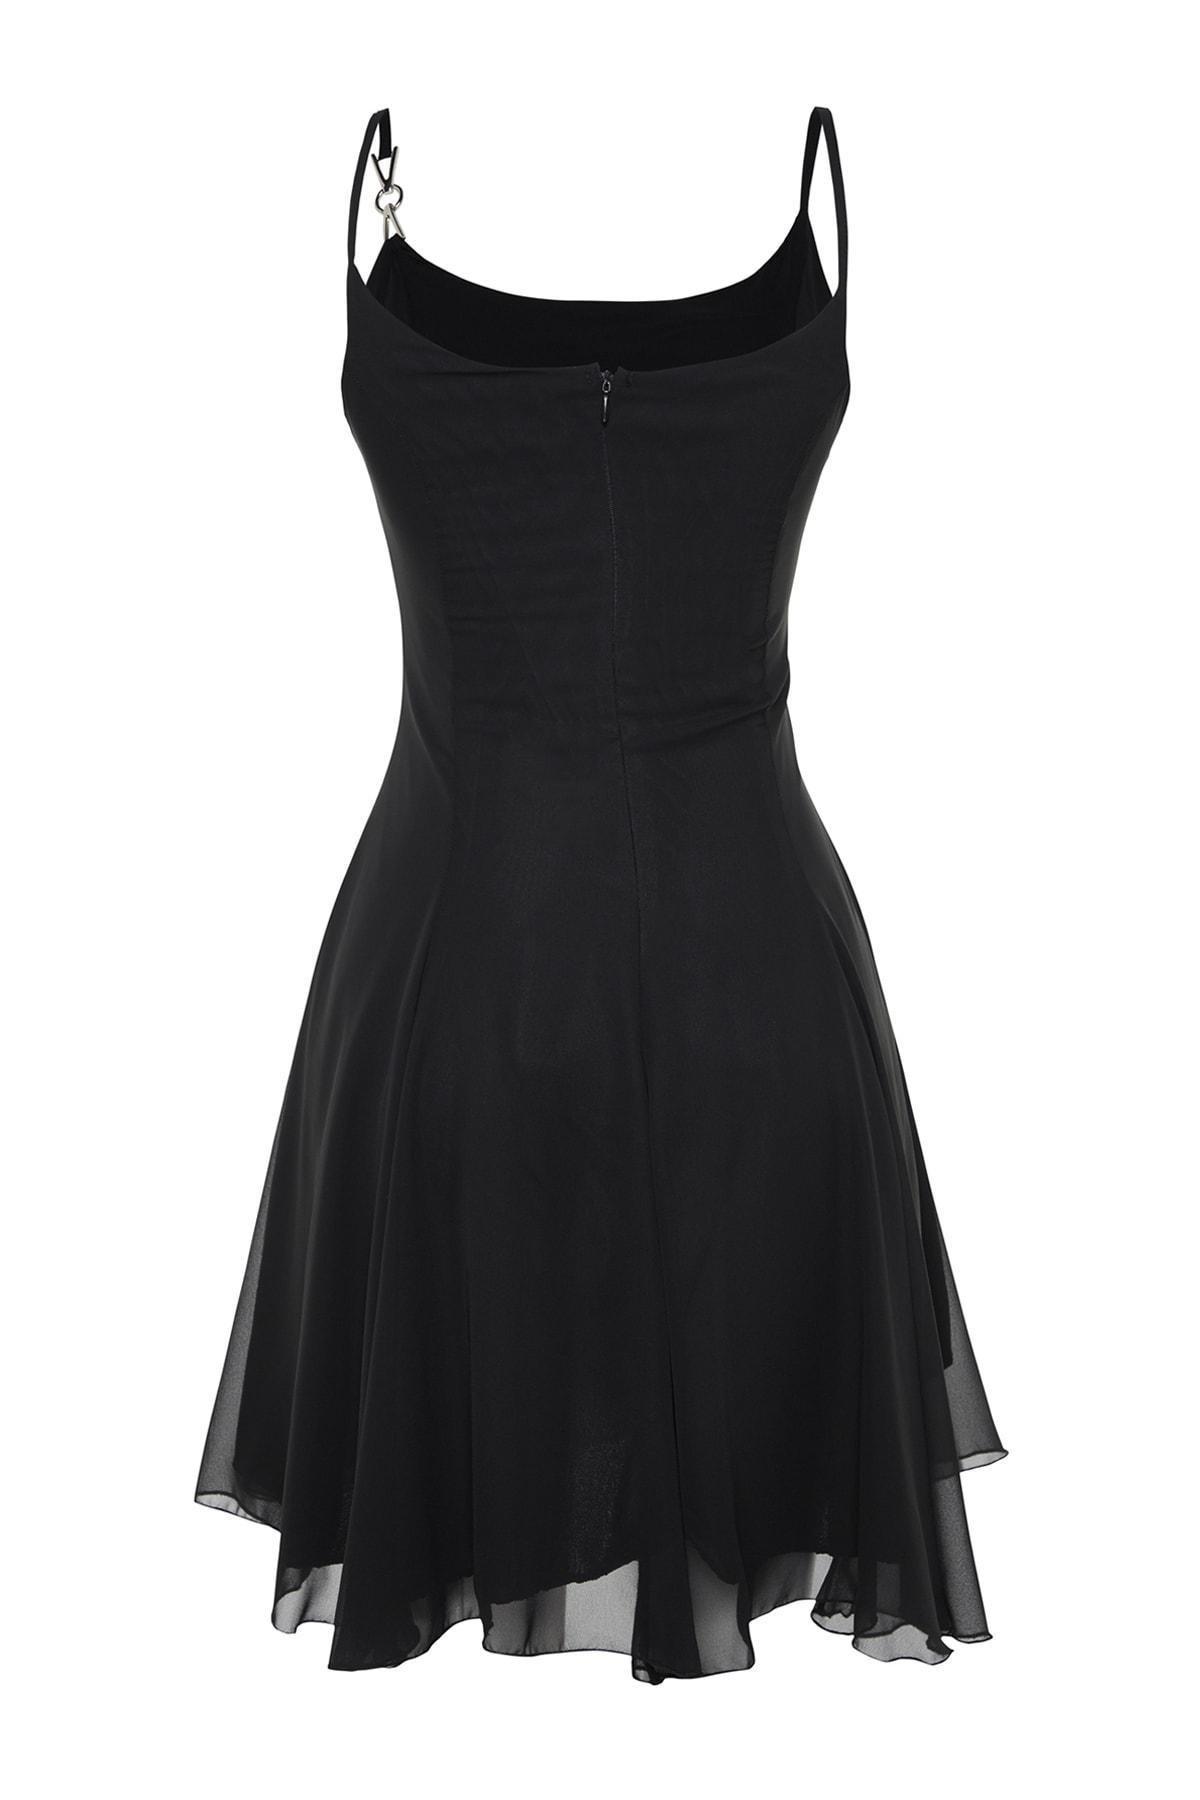 Trendyol - Black Square Collar Skater Dress